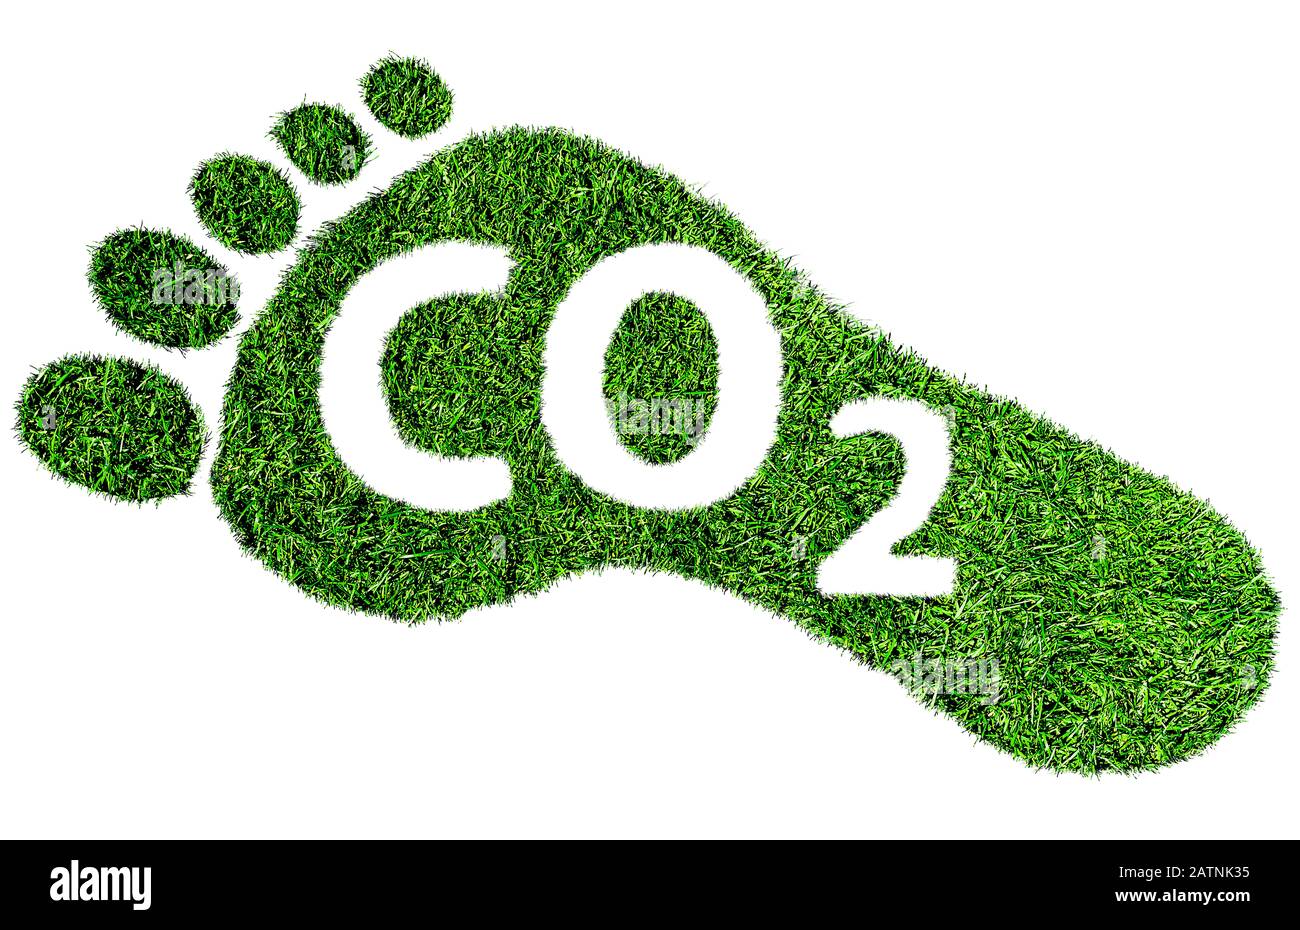 Símbolo o concepto de huella de carbono, huella descalza de hierba verde exuberante con texto CO2 Foto de stock